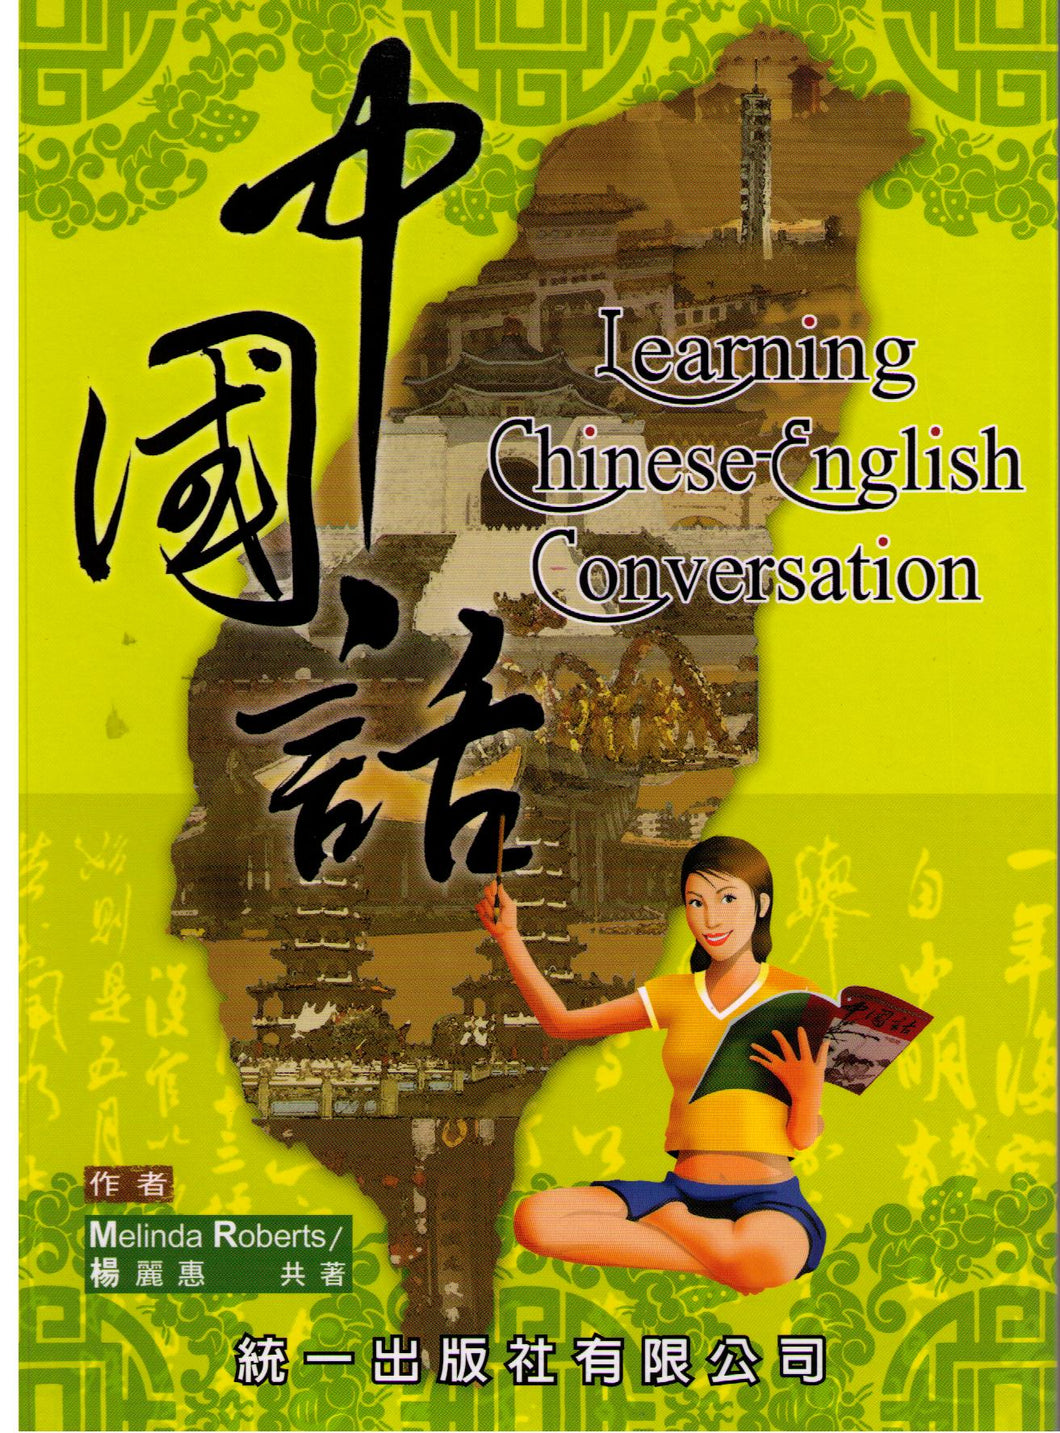 Learning Chinese-English Conversation  中國話+ 2CDs